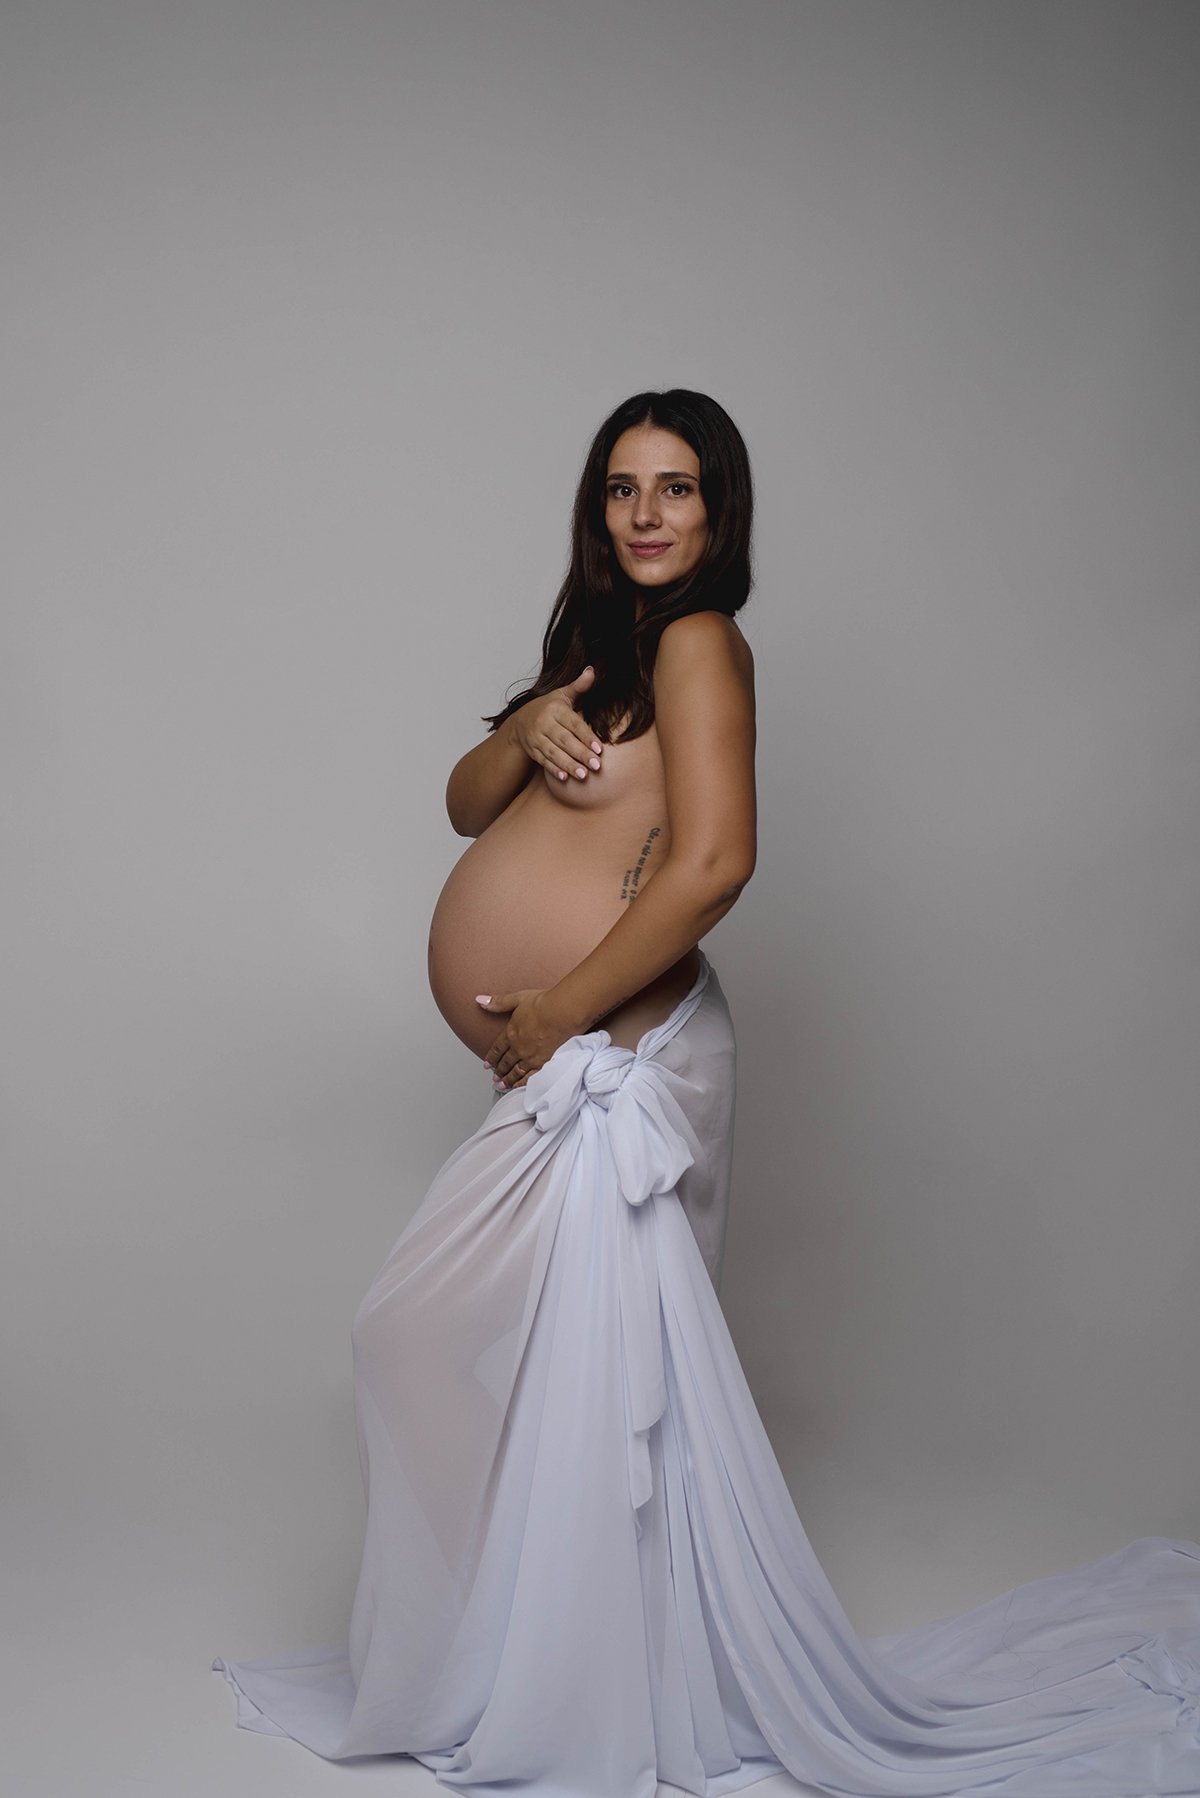 maternity-pregnancy-photographer-san-juan-puerto-rico-fabric-dress-gown-fotografa-maternidad-embarazo-09.jpg